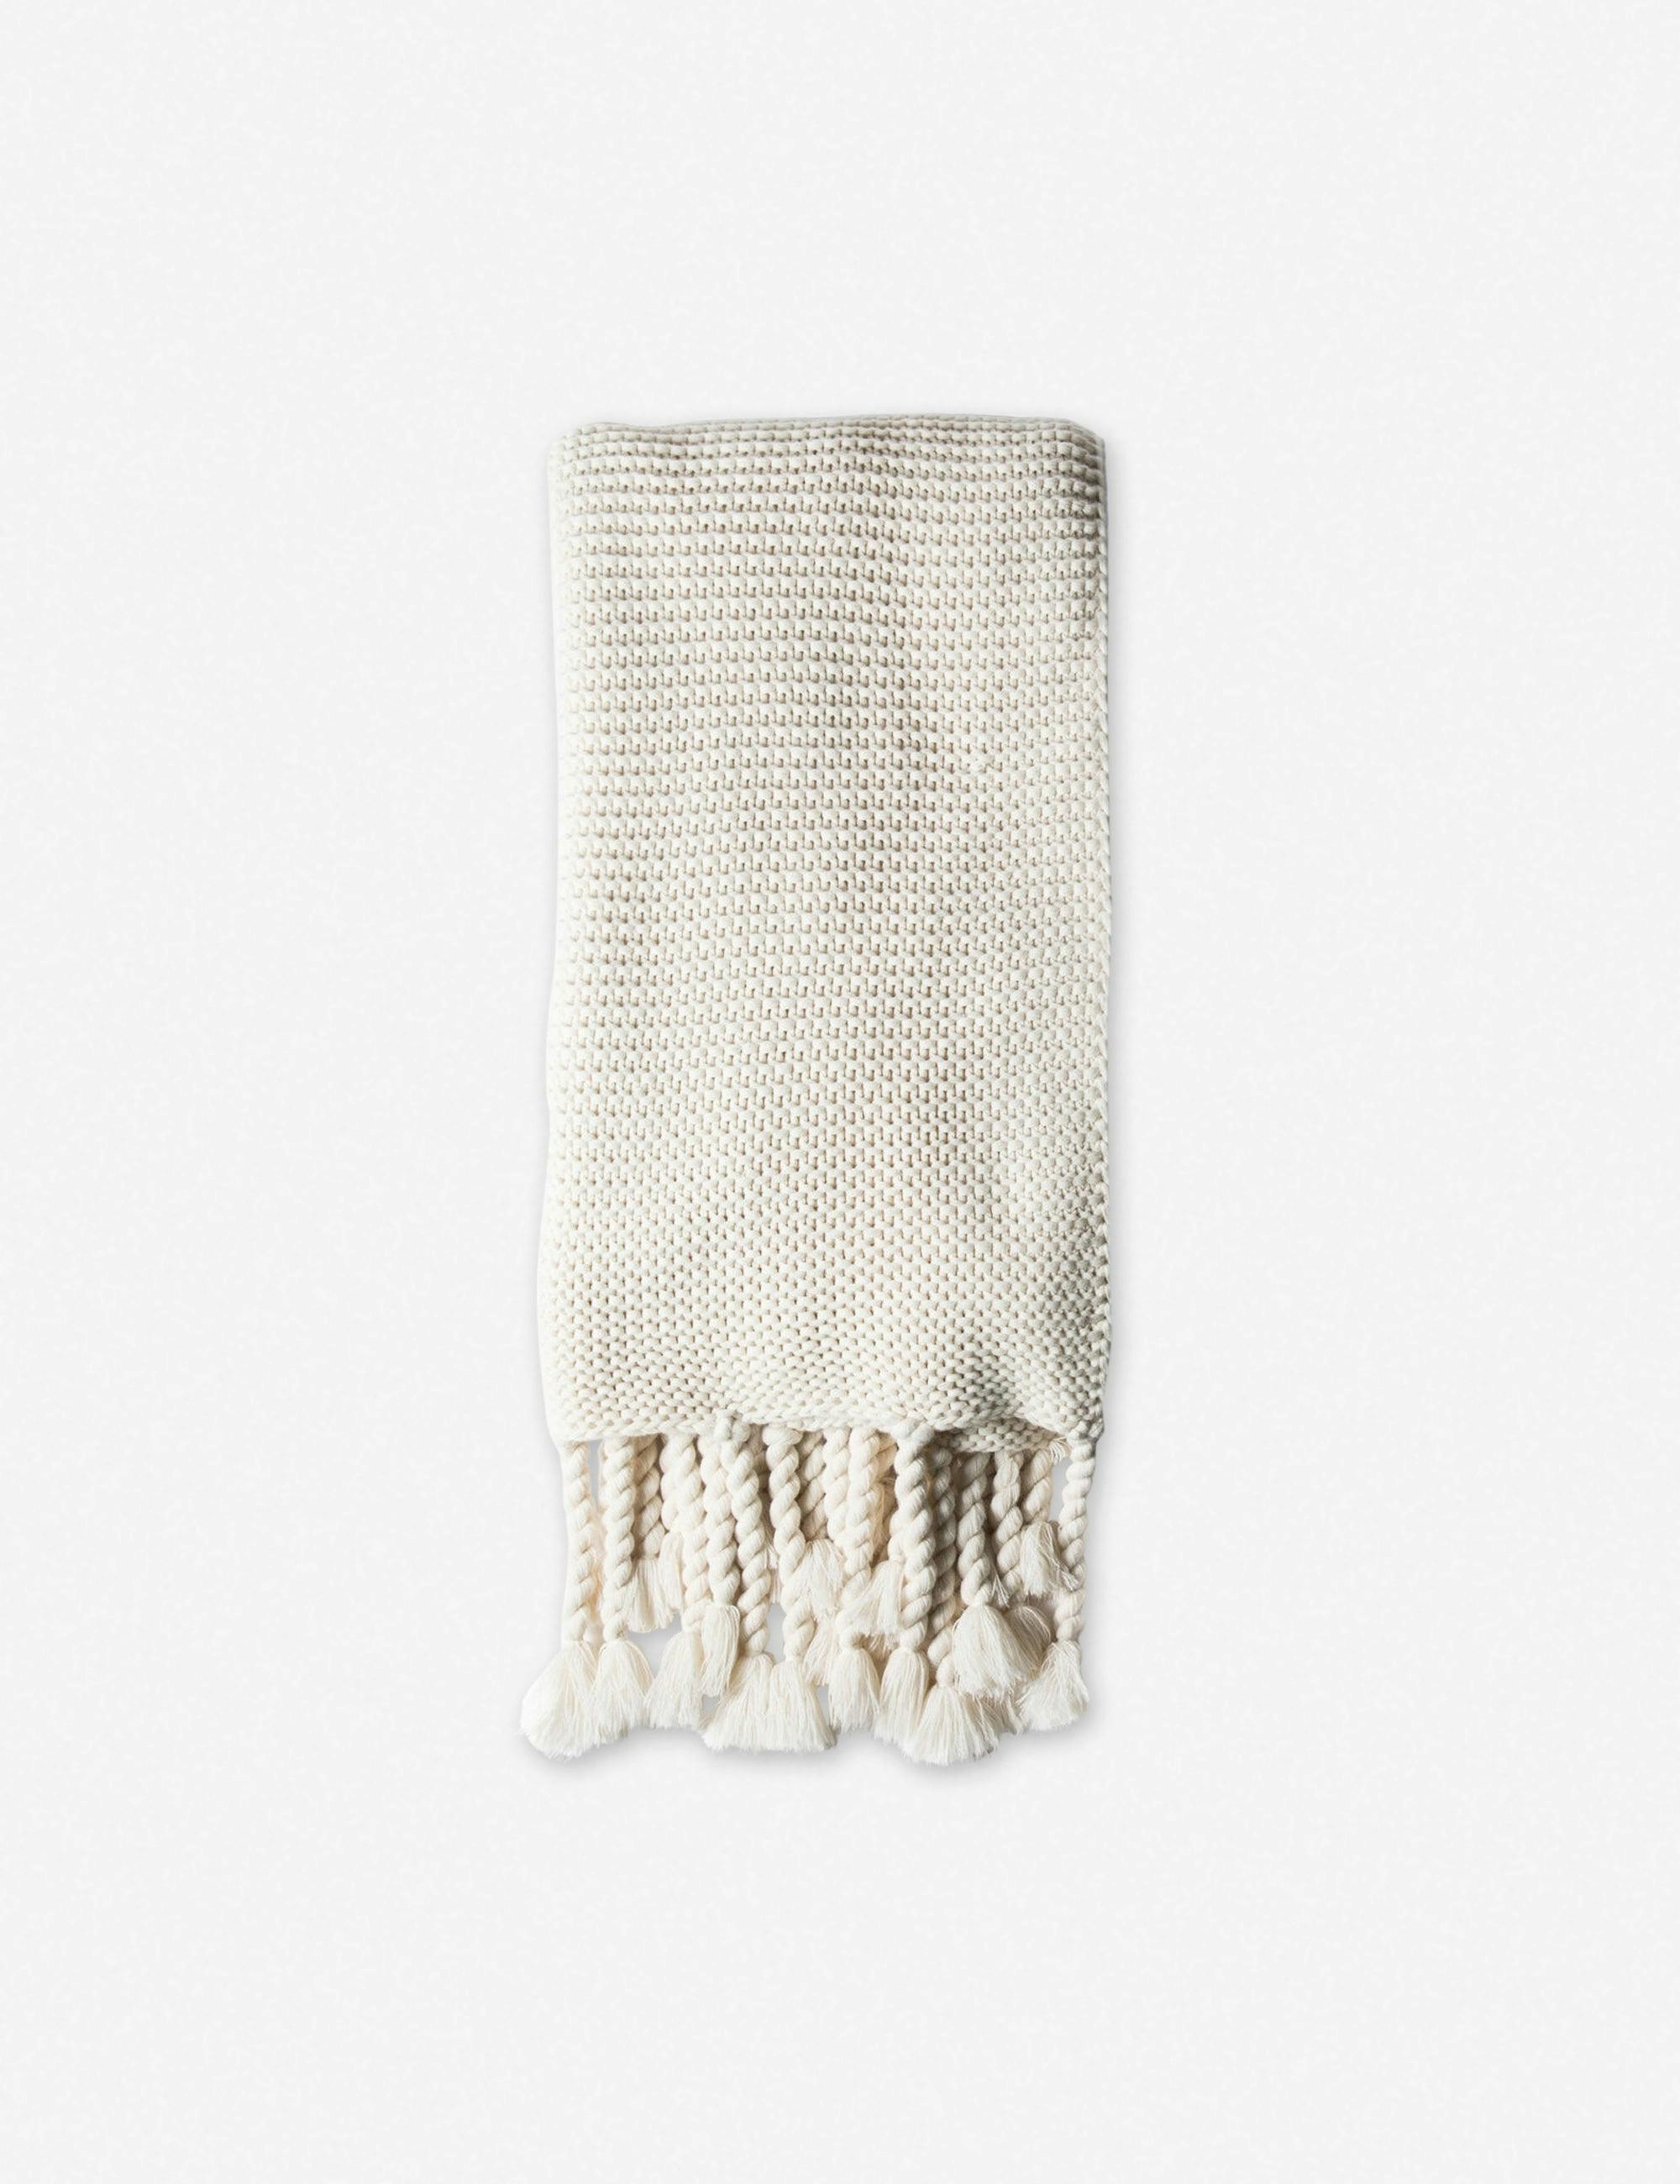 Trestles Chunky Knit Throw by Pom Pom at Home - White